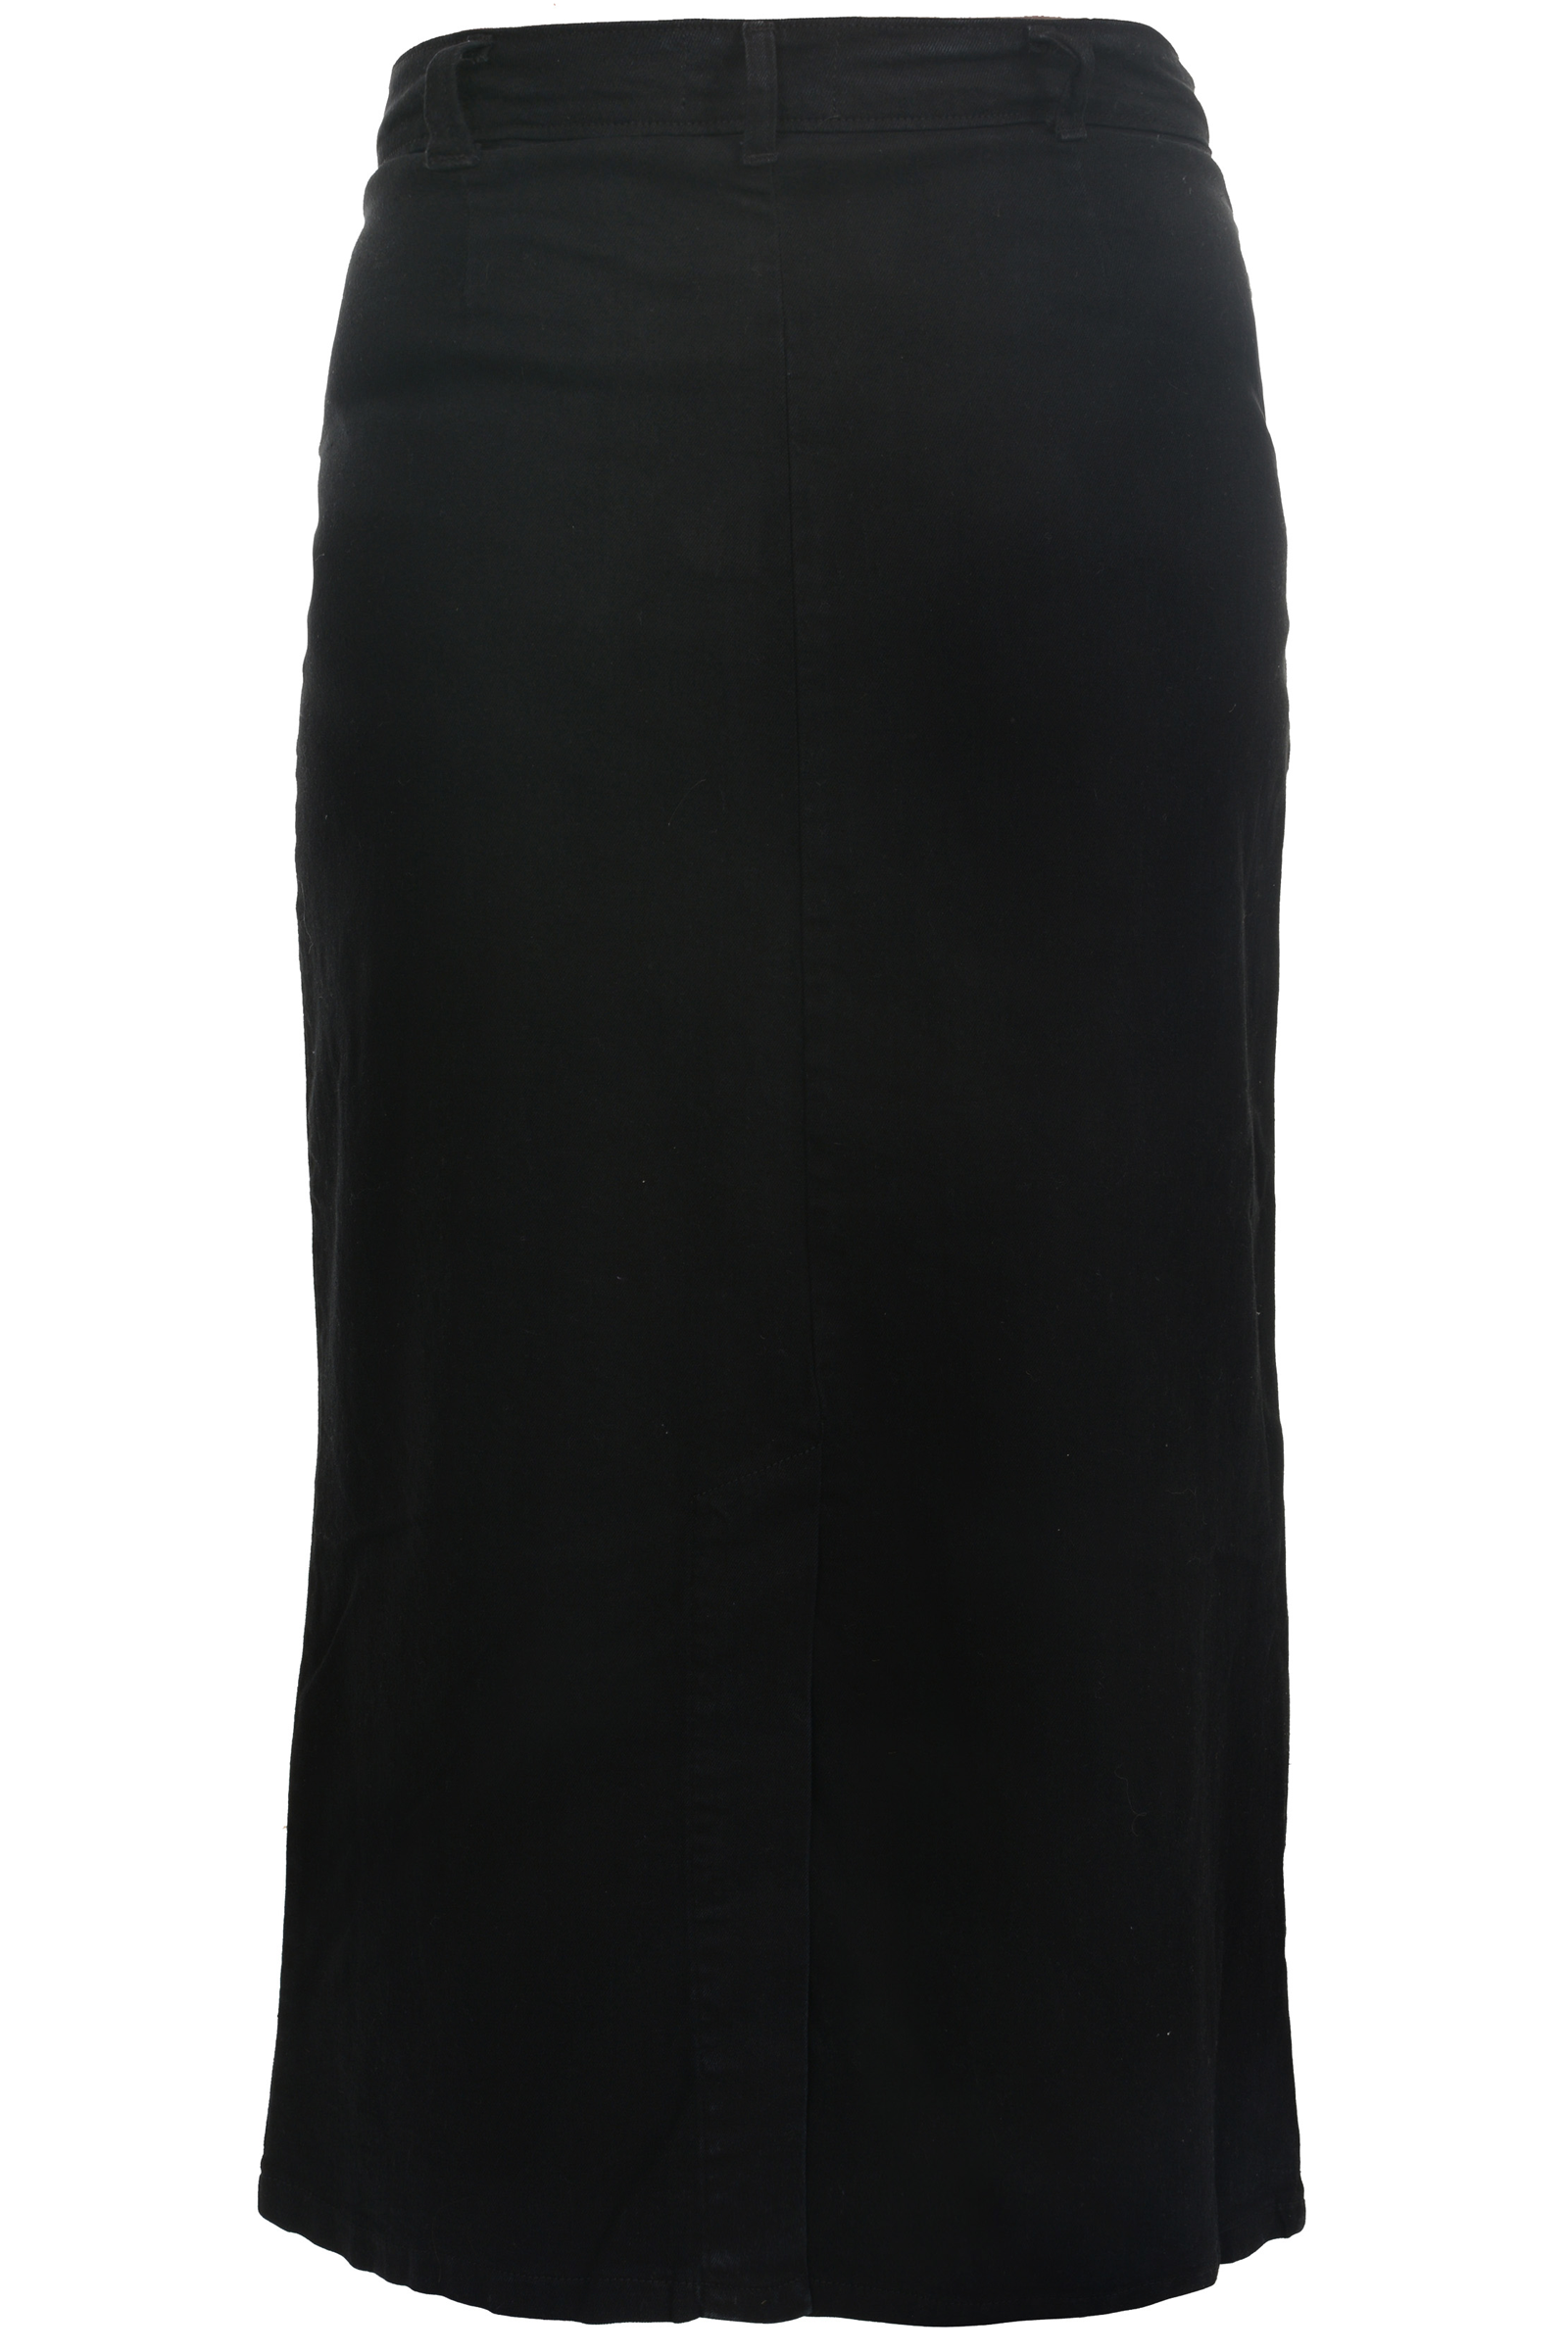 black stretch maxi skirt